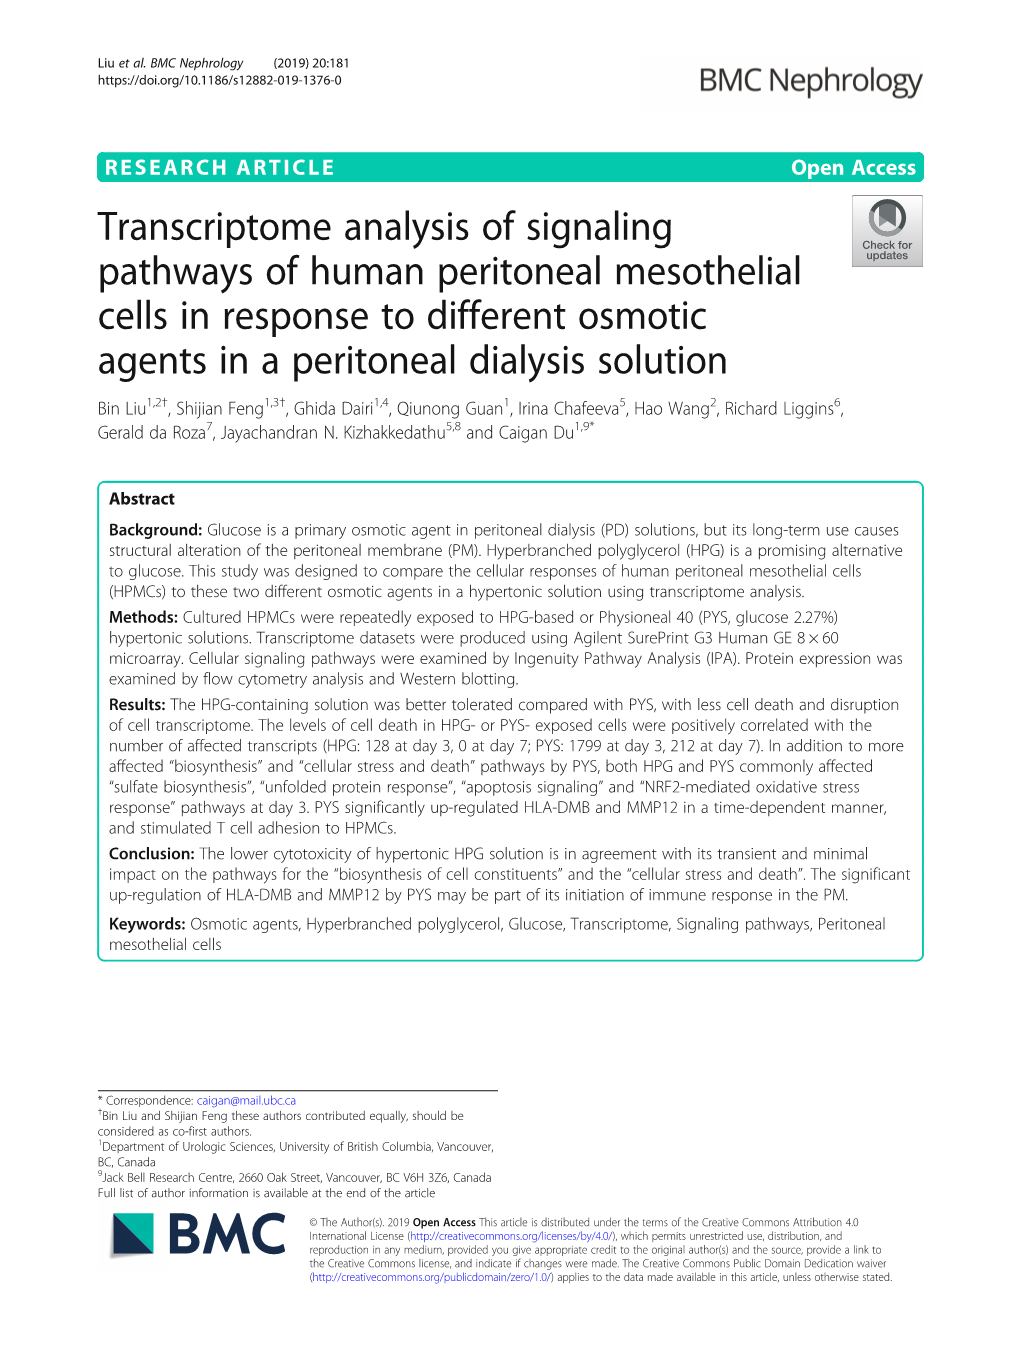 Transcriptome Analysis of Signaling Pathways of Human Peritoneal